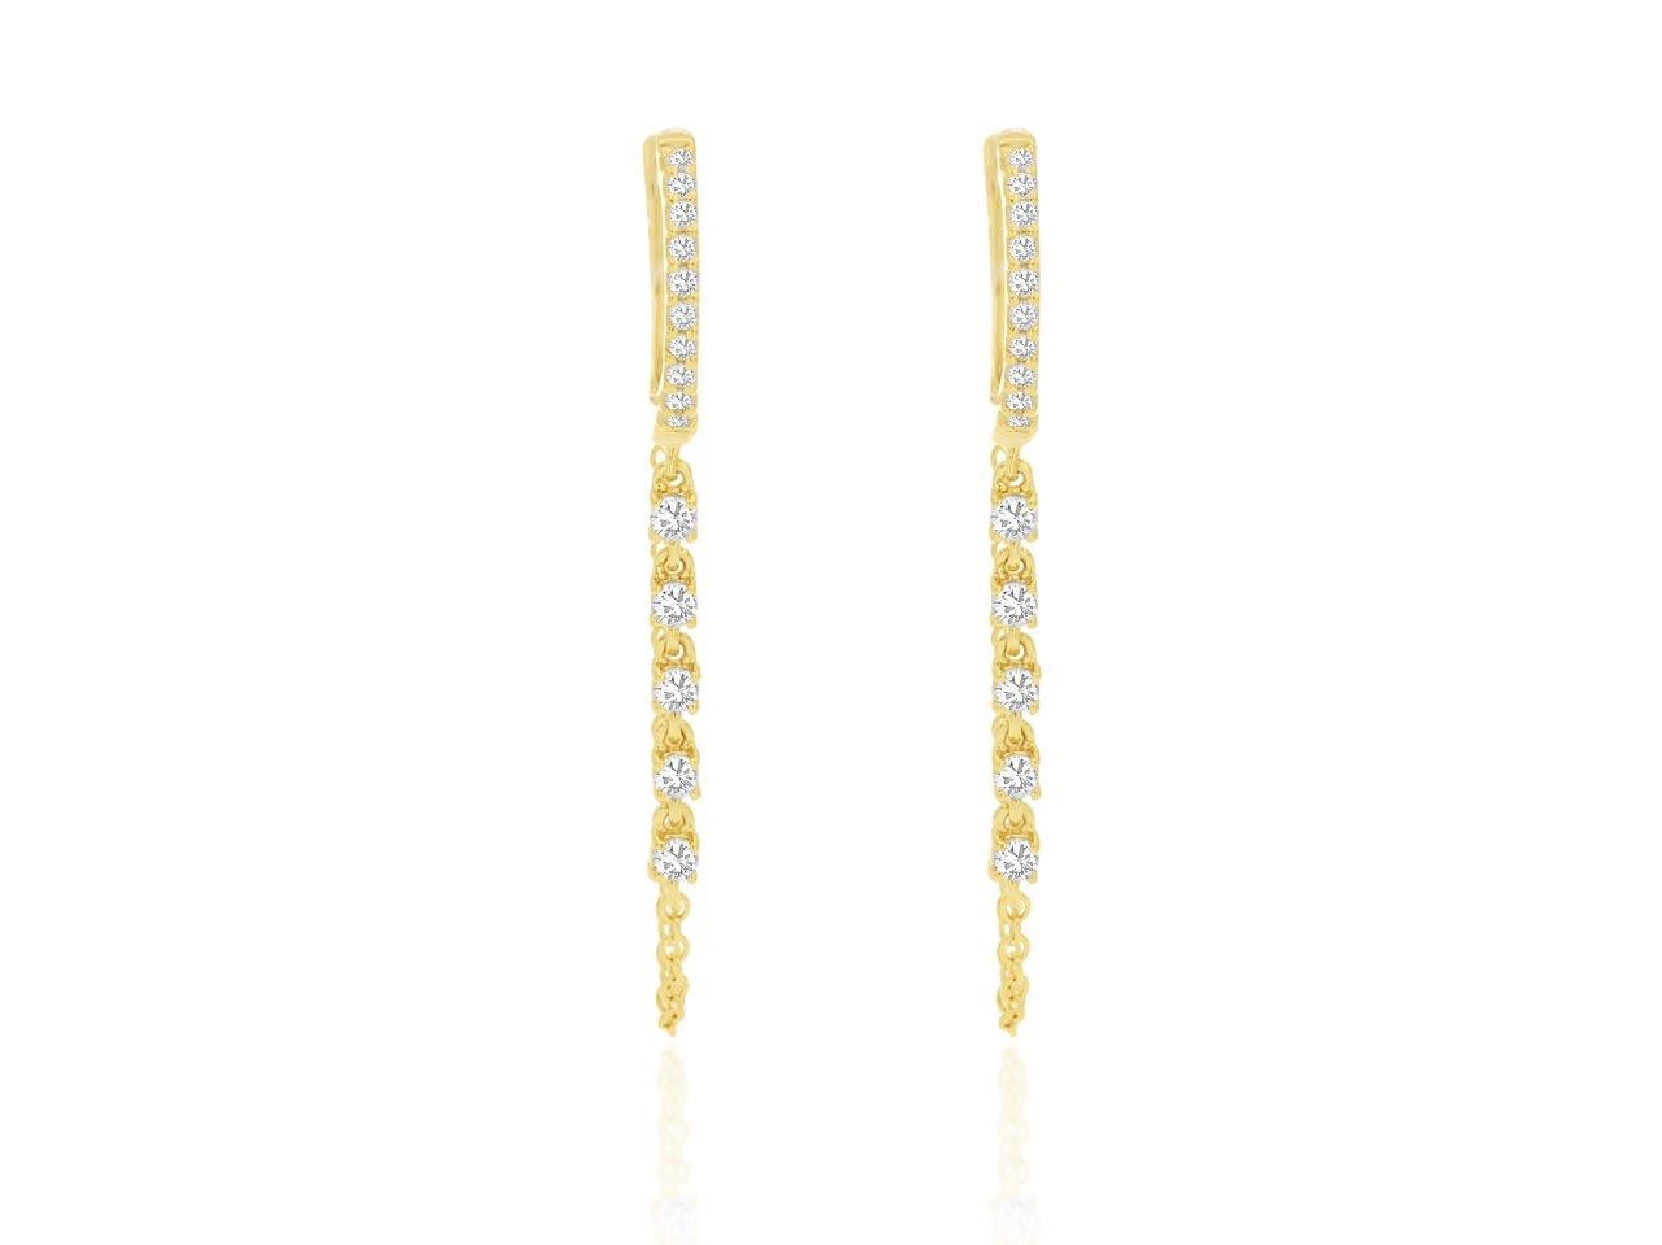 14K Yellow Gold Diamond Hoop Earrings with Diamond Chain Dangle 

0.40cttw Diamonds